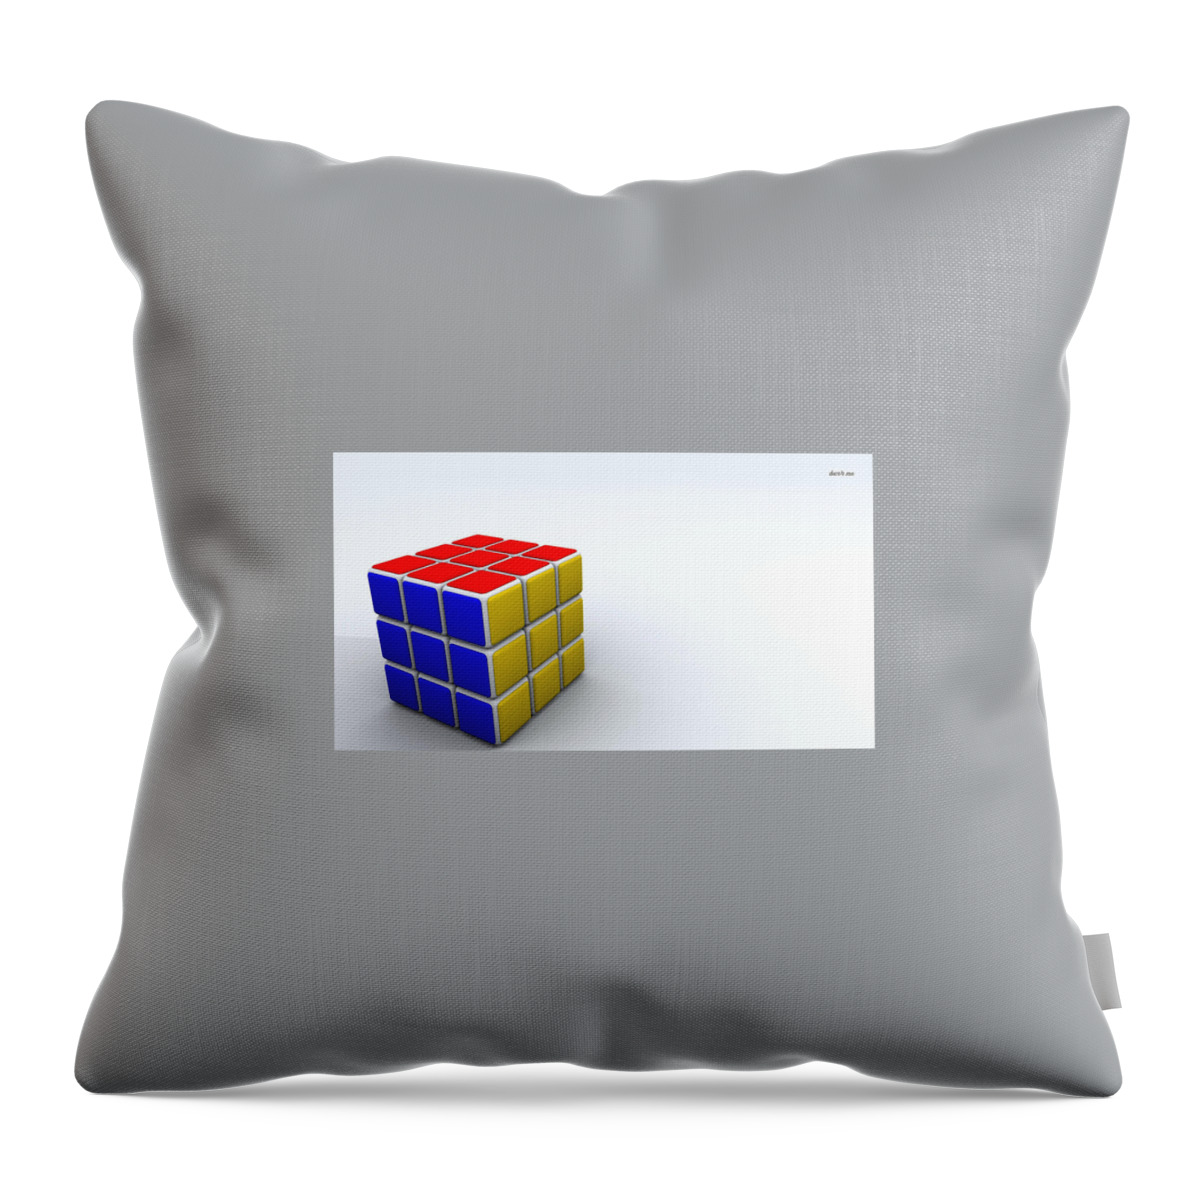 Rubik's Cube Throw Pillow featuring the digital art Rubik's Cube by Maye Loeser